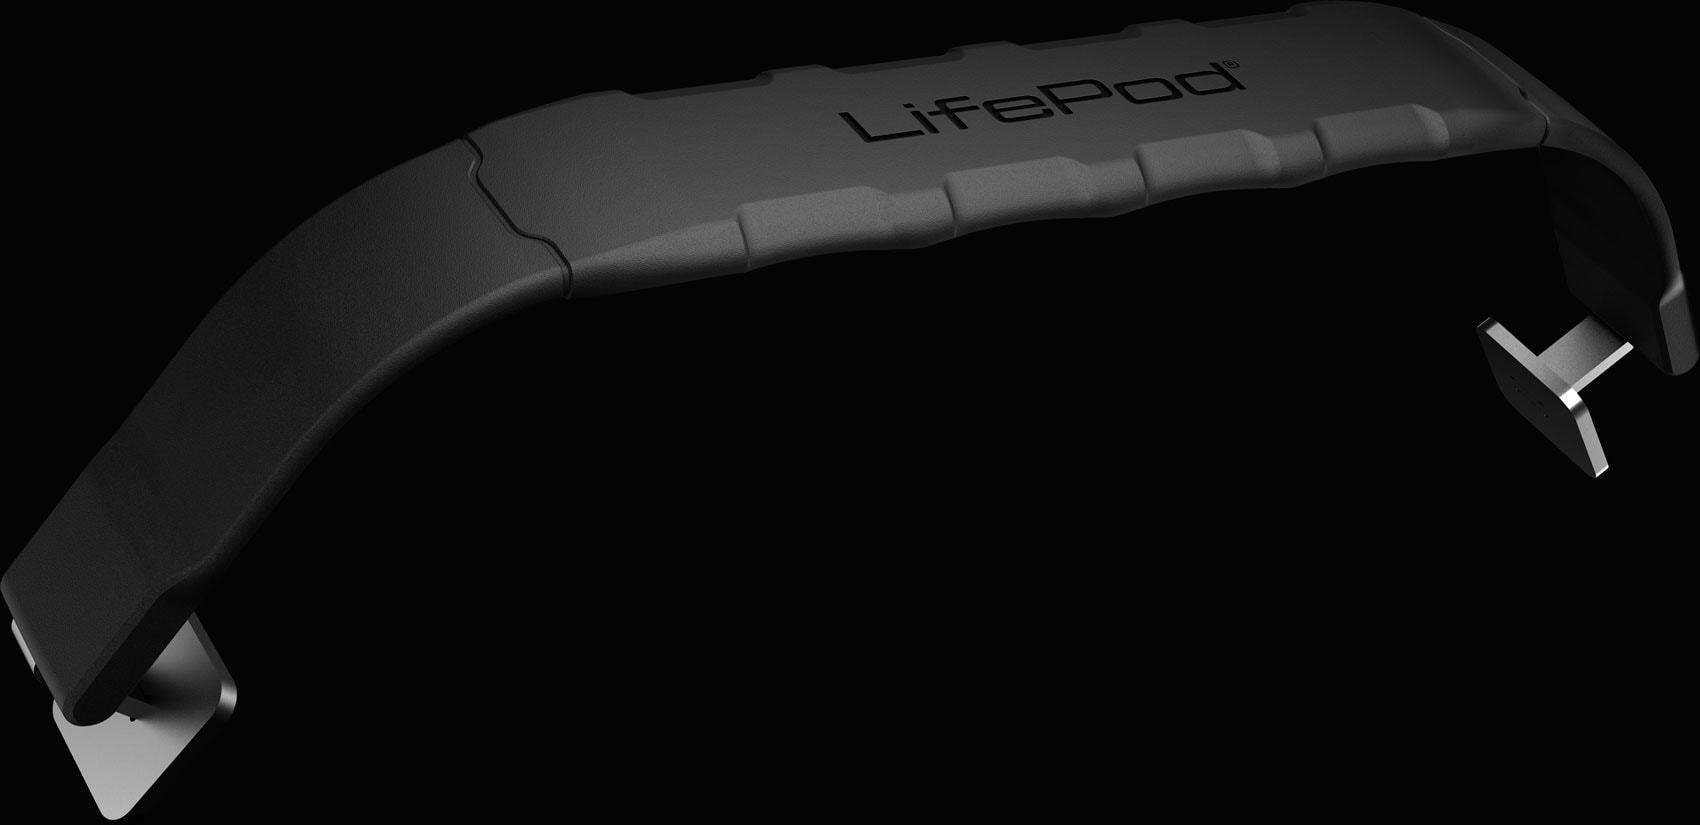 Vaultek Safe | LifePod 2.0 Carry Handle